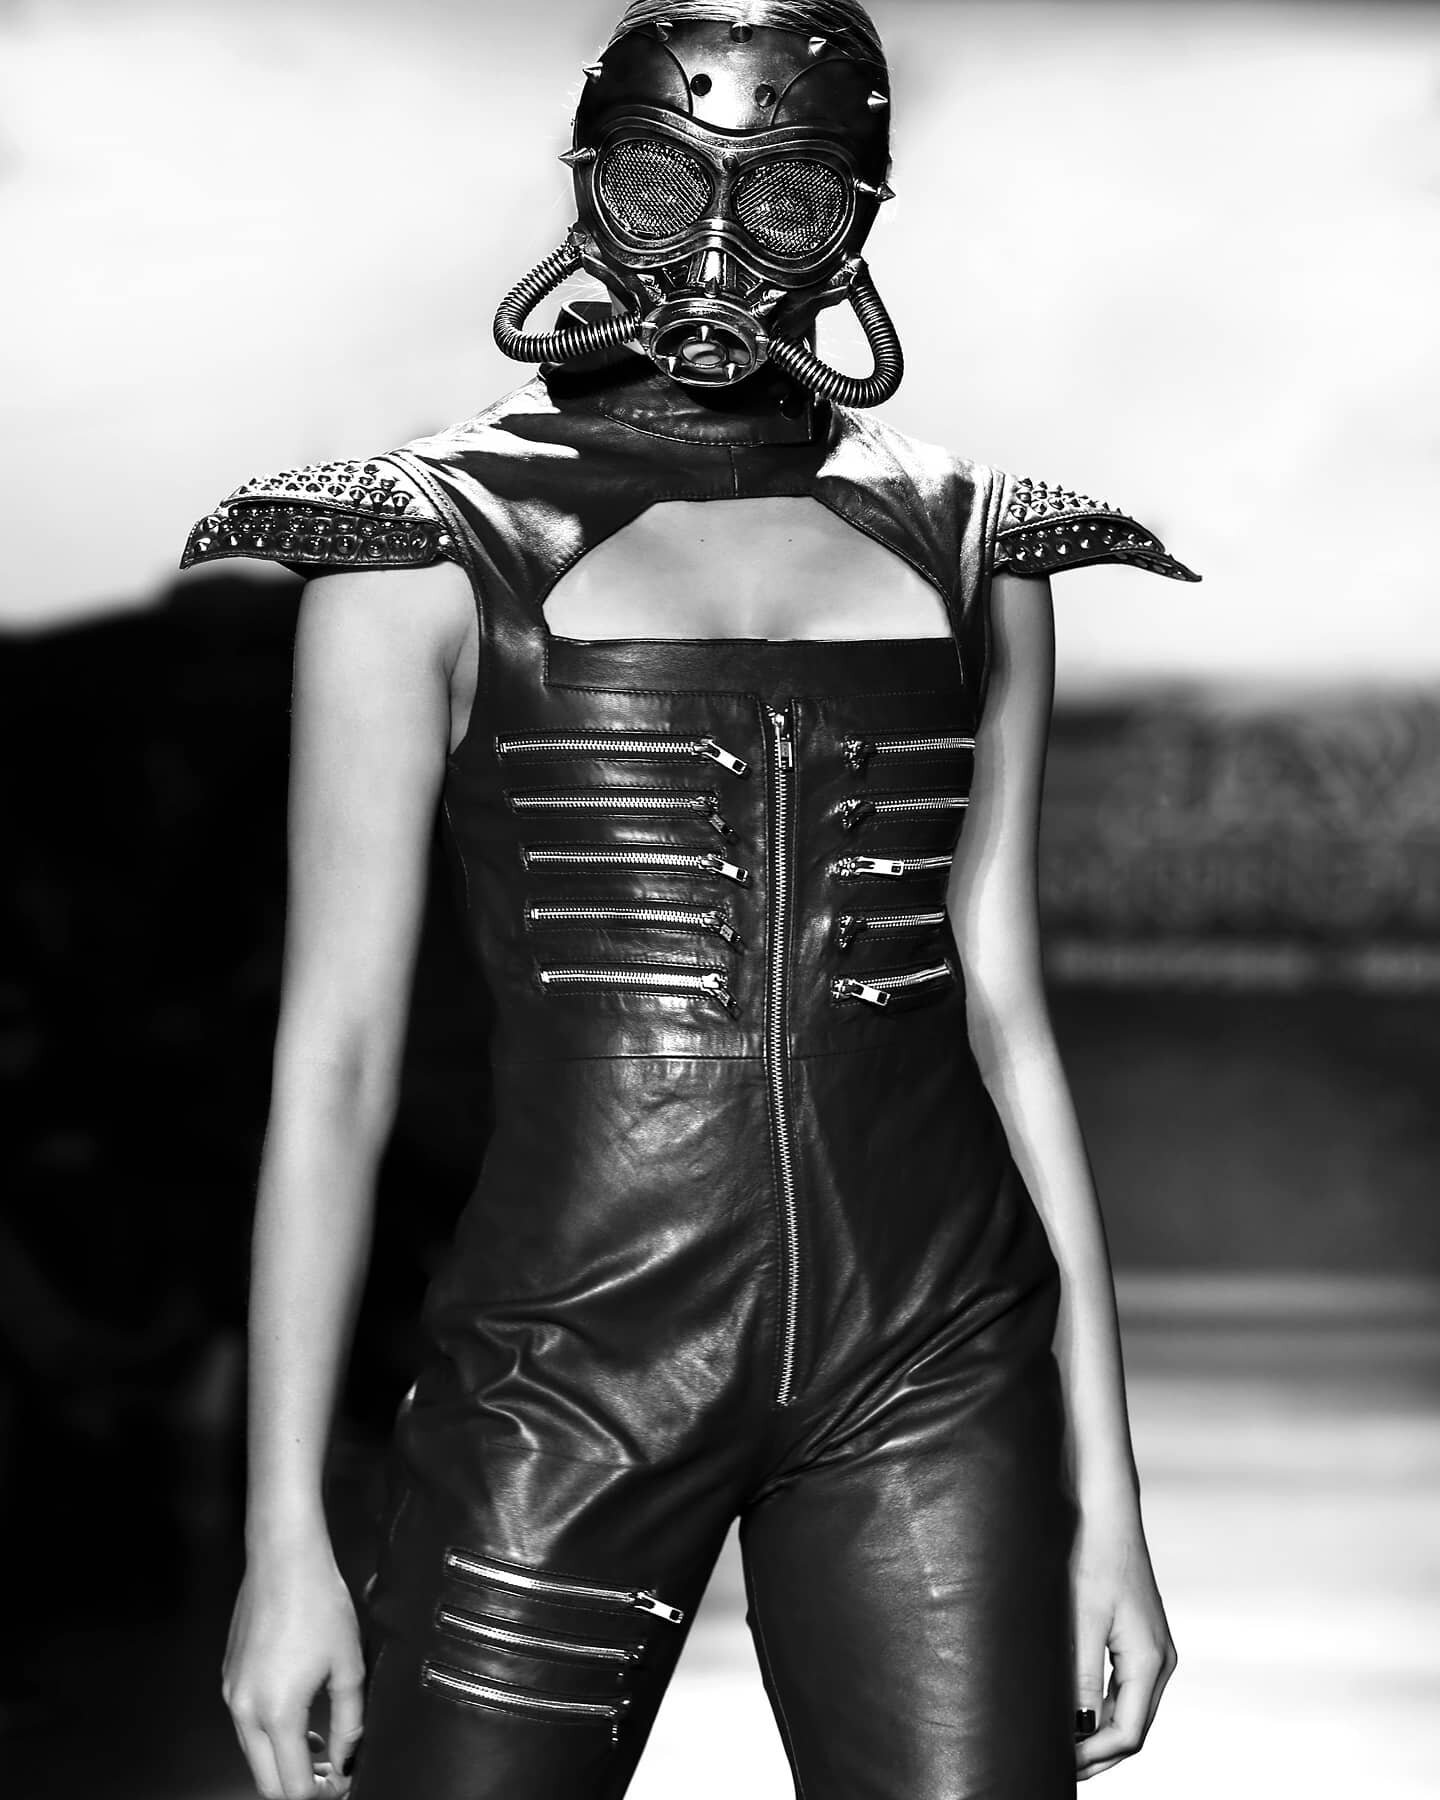 Fashion, always ahead of the curve
&deg;
&deg;
&deg;
&deg;
&deg;
&deg;
#tb #fashion #nyfw #lafw #mask #spikes #leather #bnw #runwaymodel #runway #breathingmask #coronavirus #pandemic #style #helmet #madmax #nyc #society #thefuture #fiercewomen #slay 